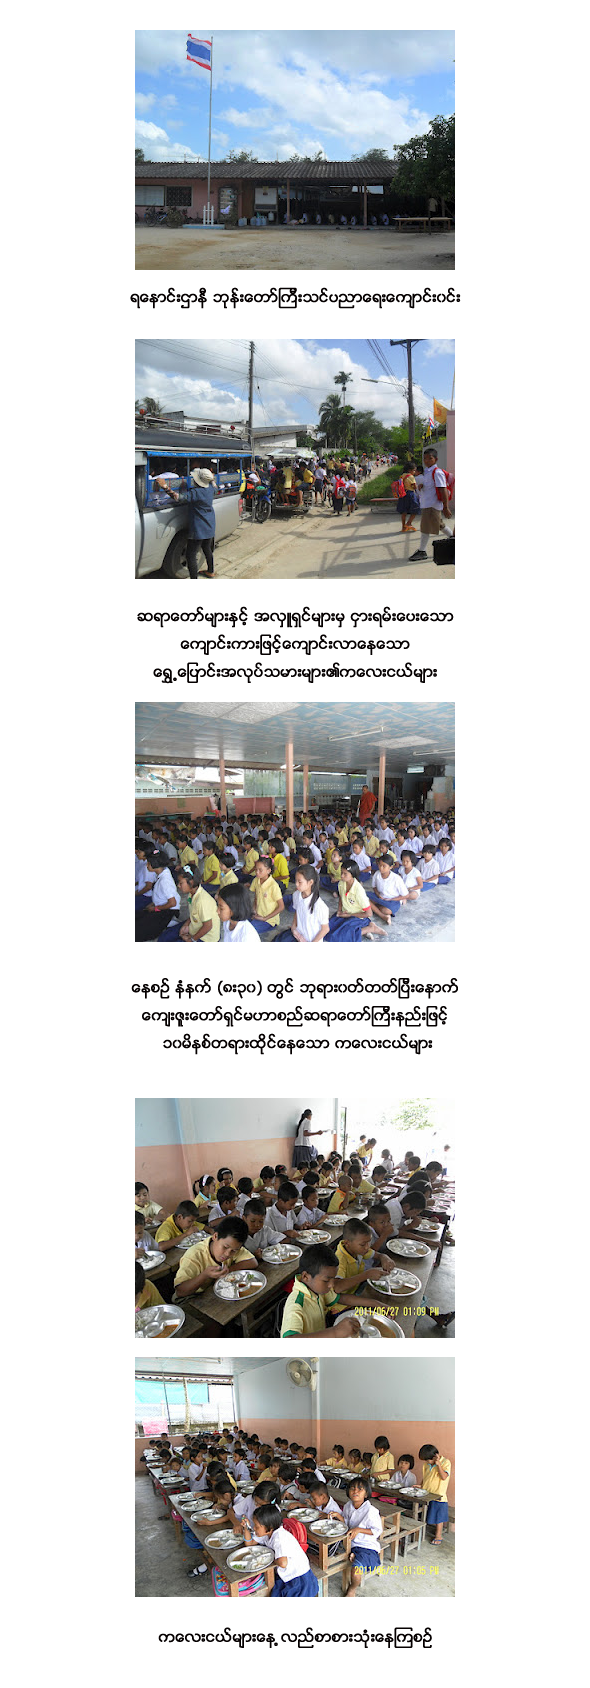 Ya Naung Monastery Education (Ya Naung - Thailand)